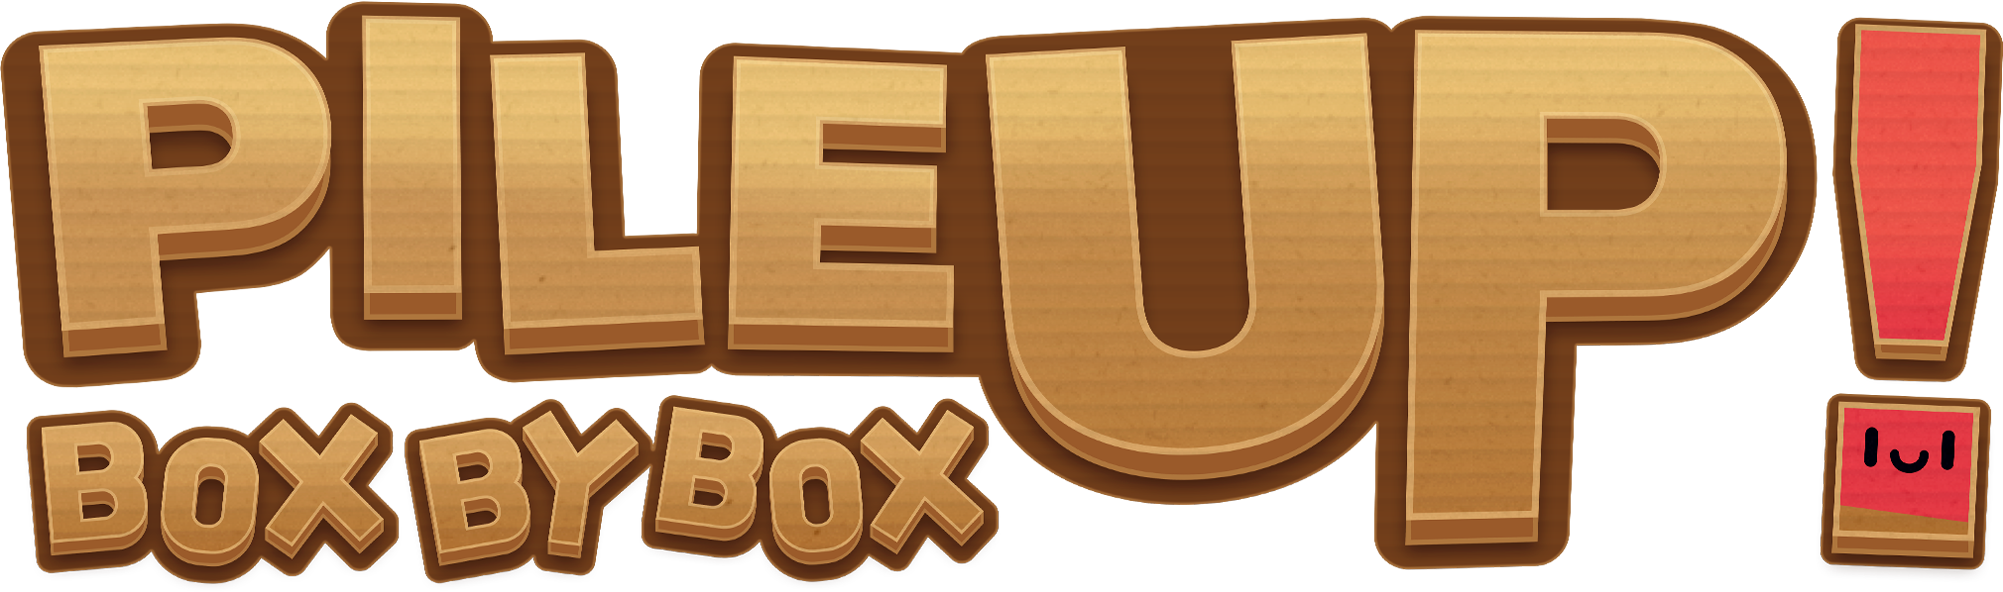 Análise: Pile Up! – Box by Box